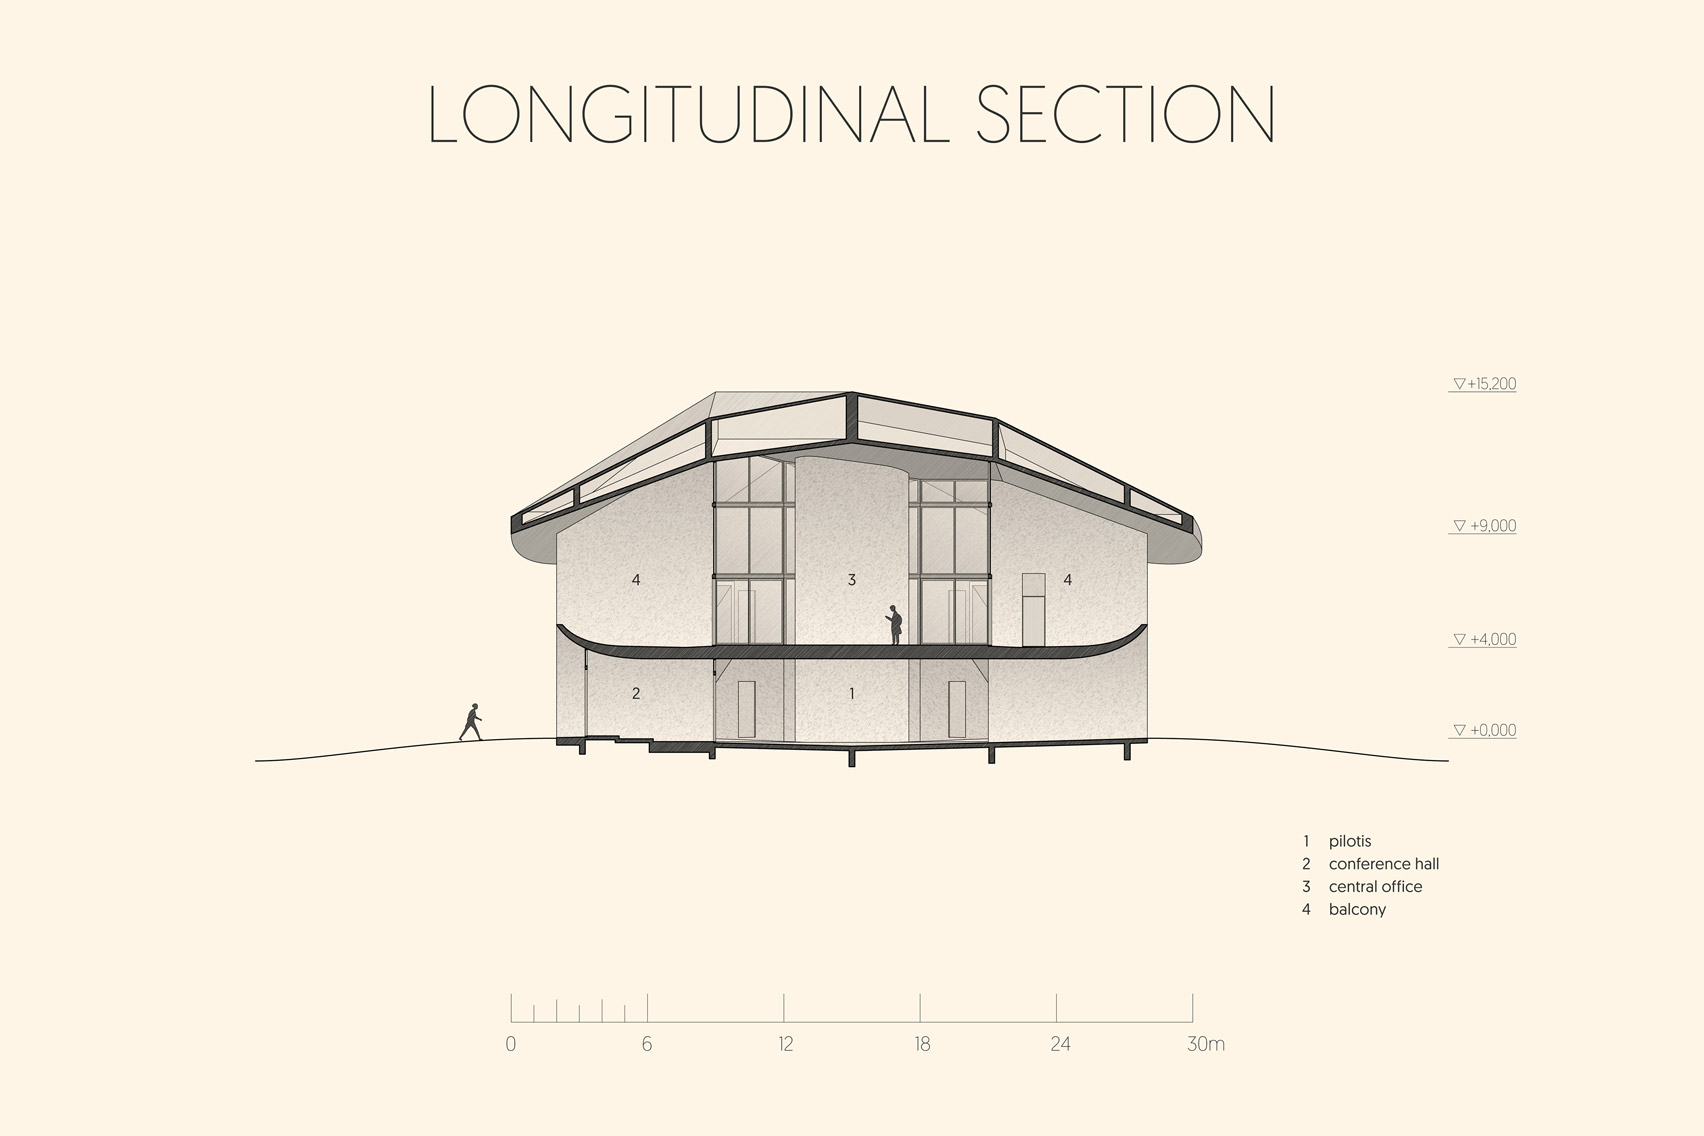 Longitudinal section